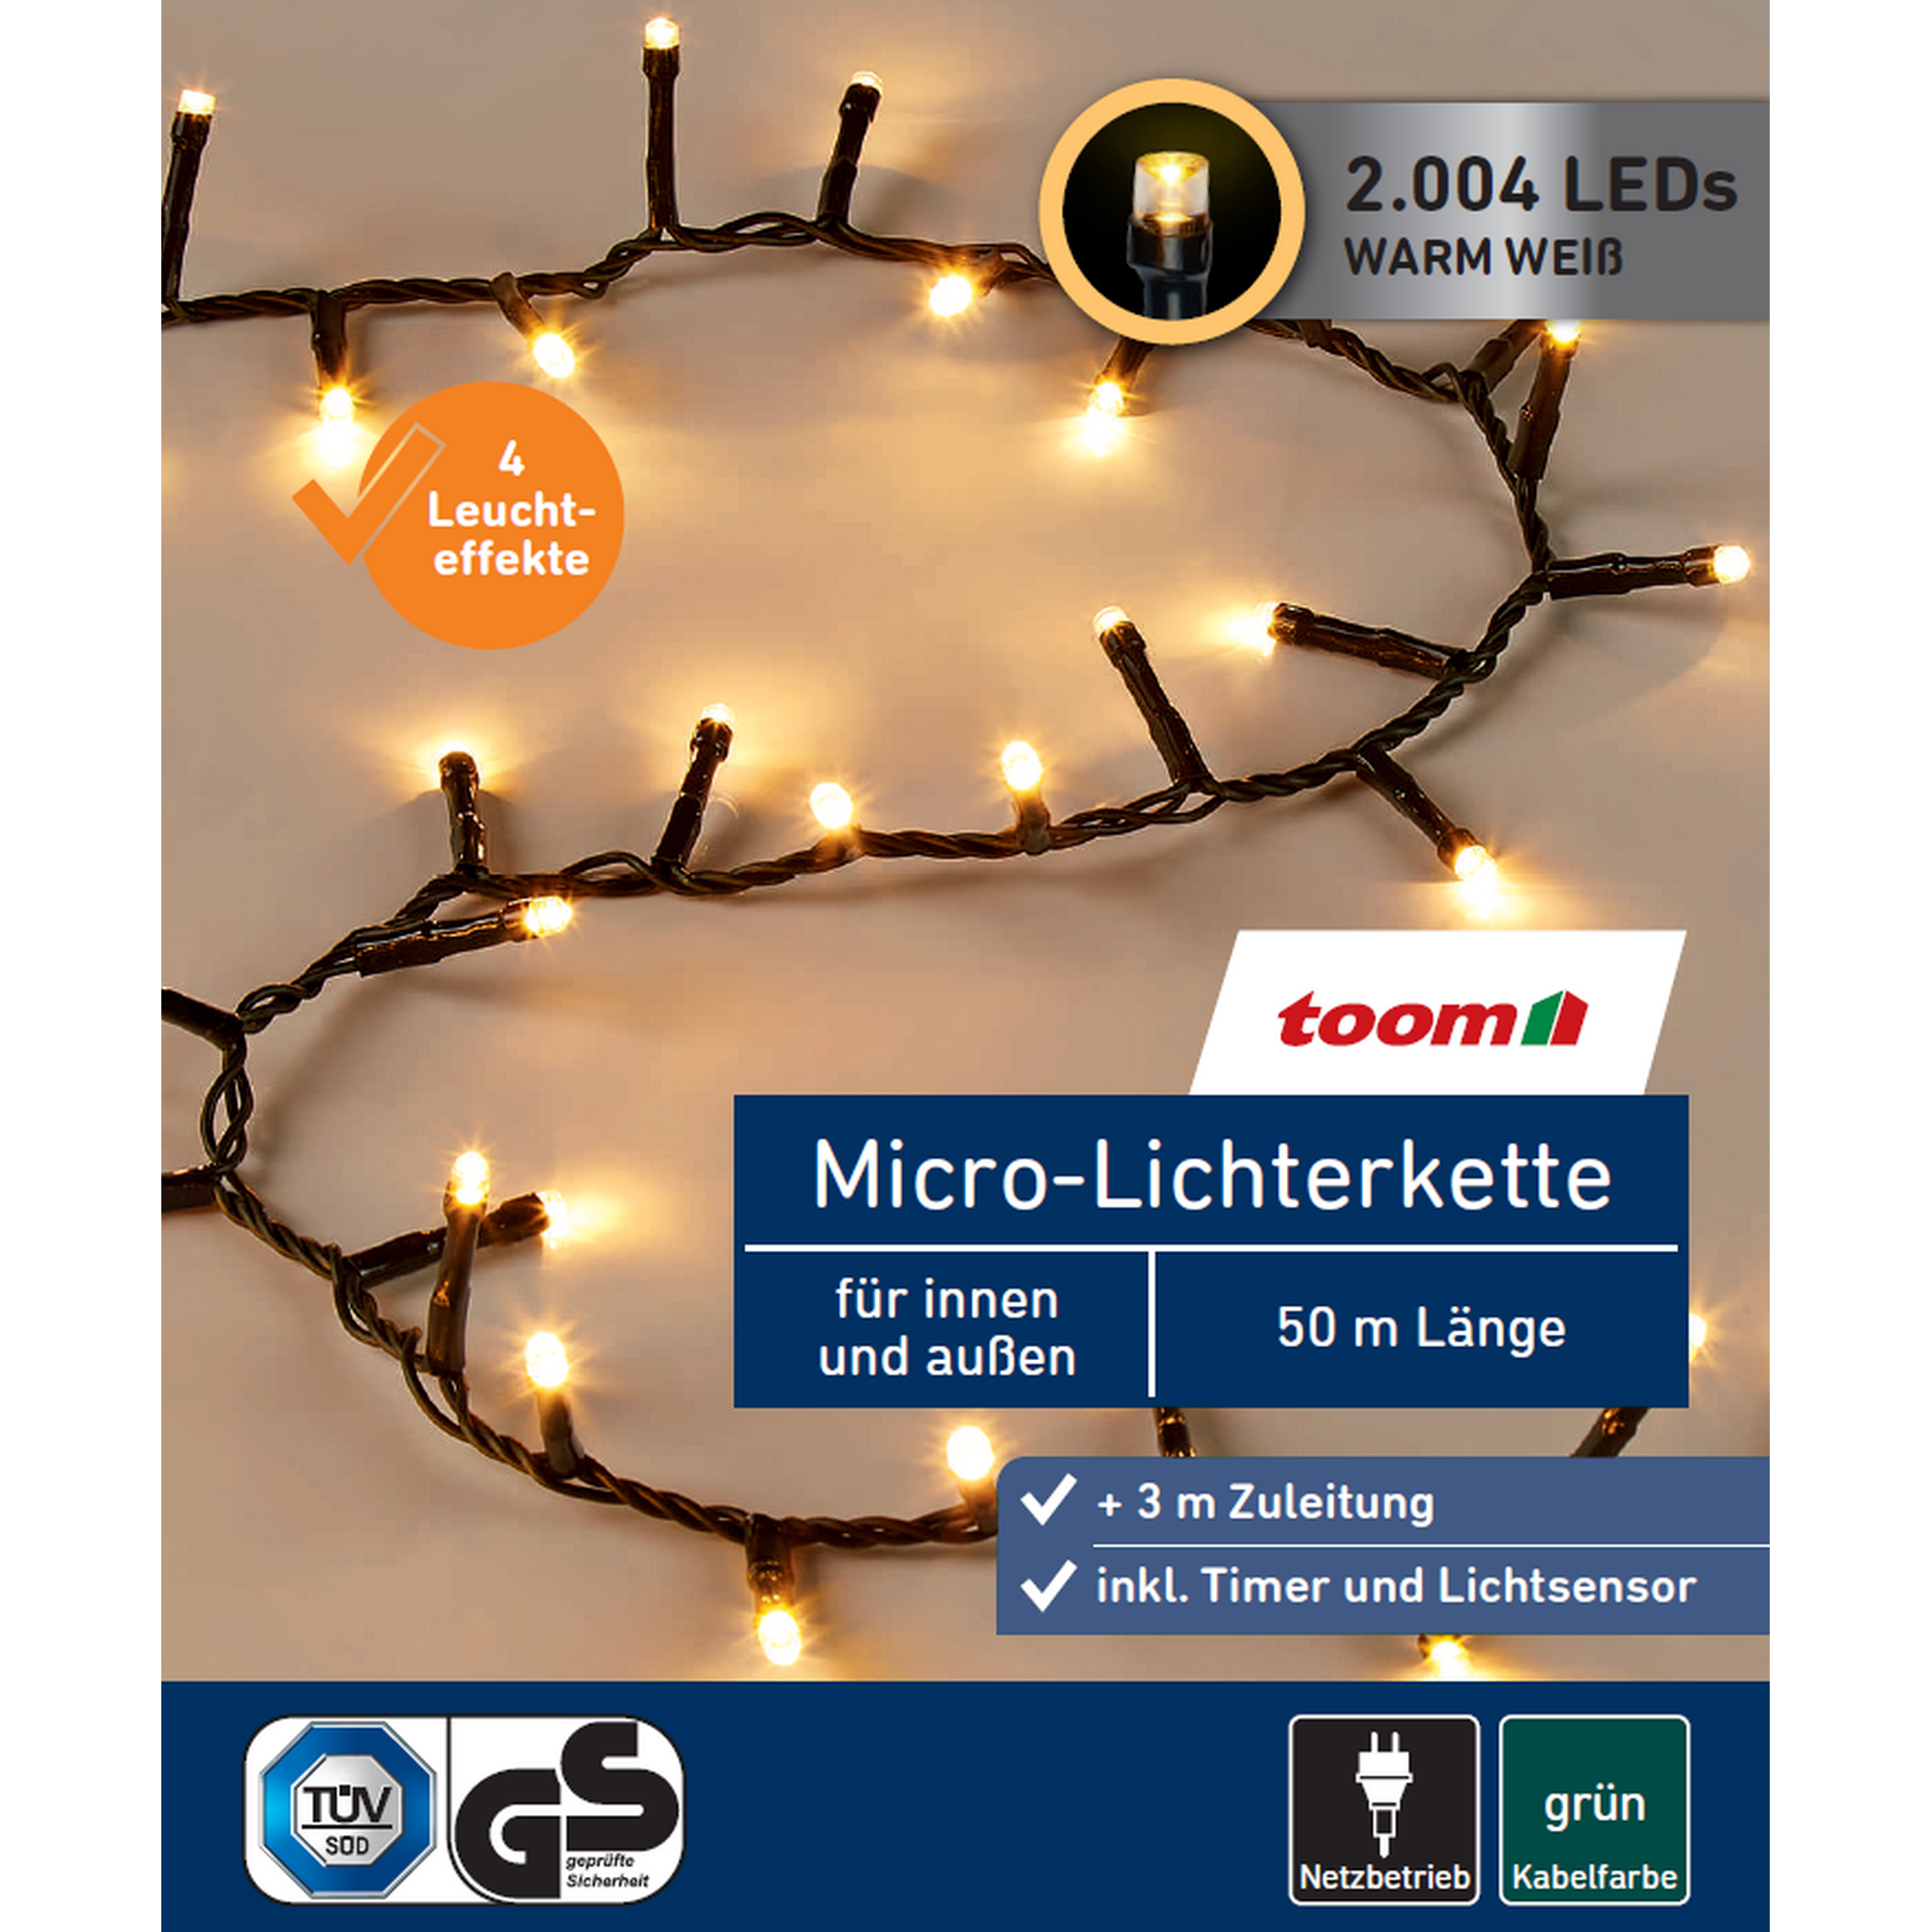 LED-Mini-Lichterkette 2004 LEDs warmweiß 5000 cm + product picture